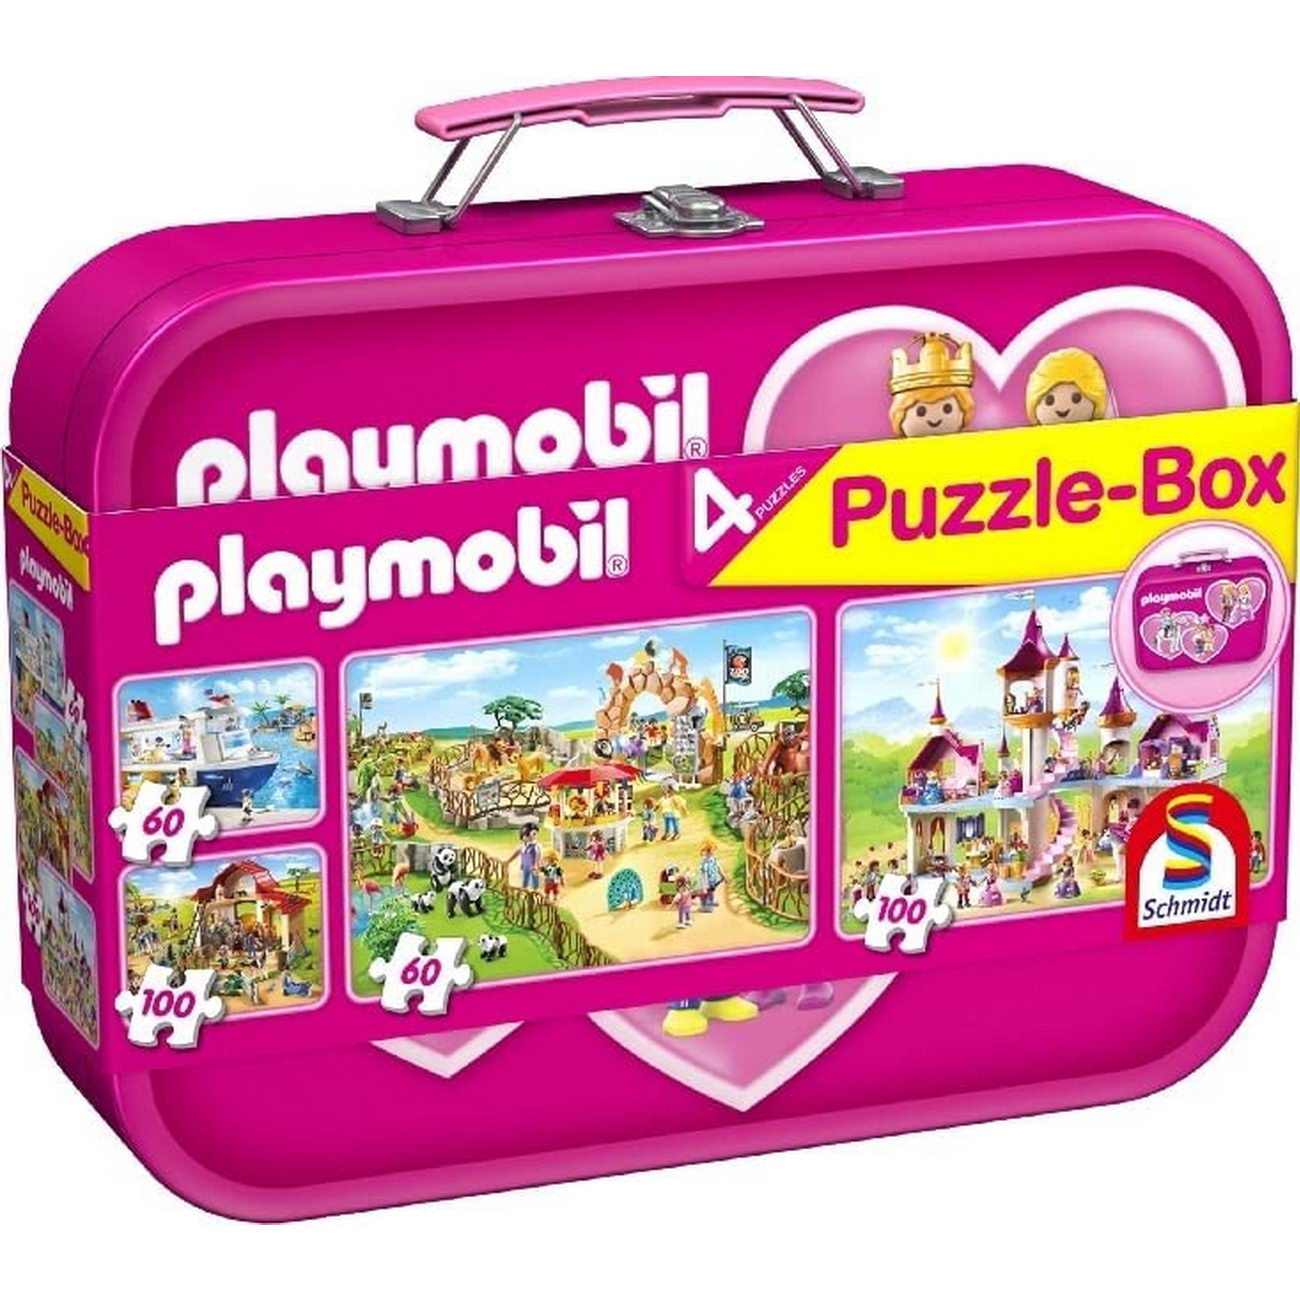 Puzzle Box Playmobil pink (56498)